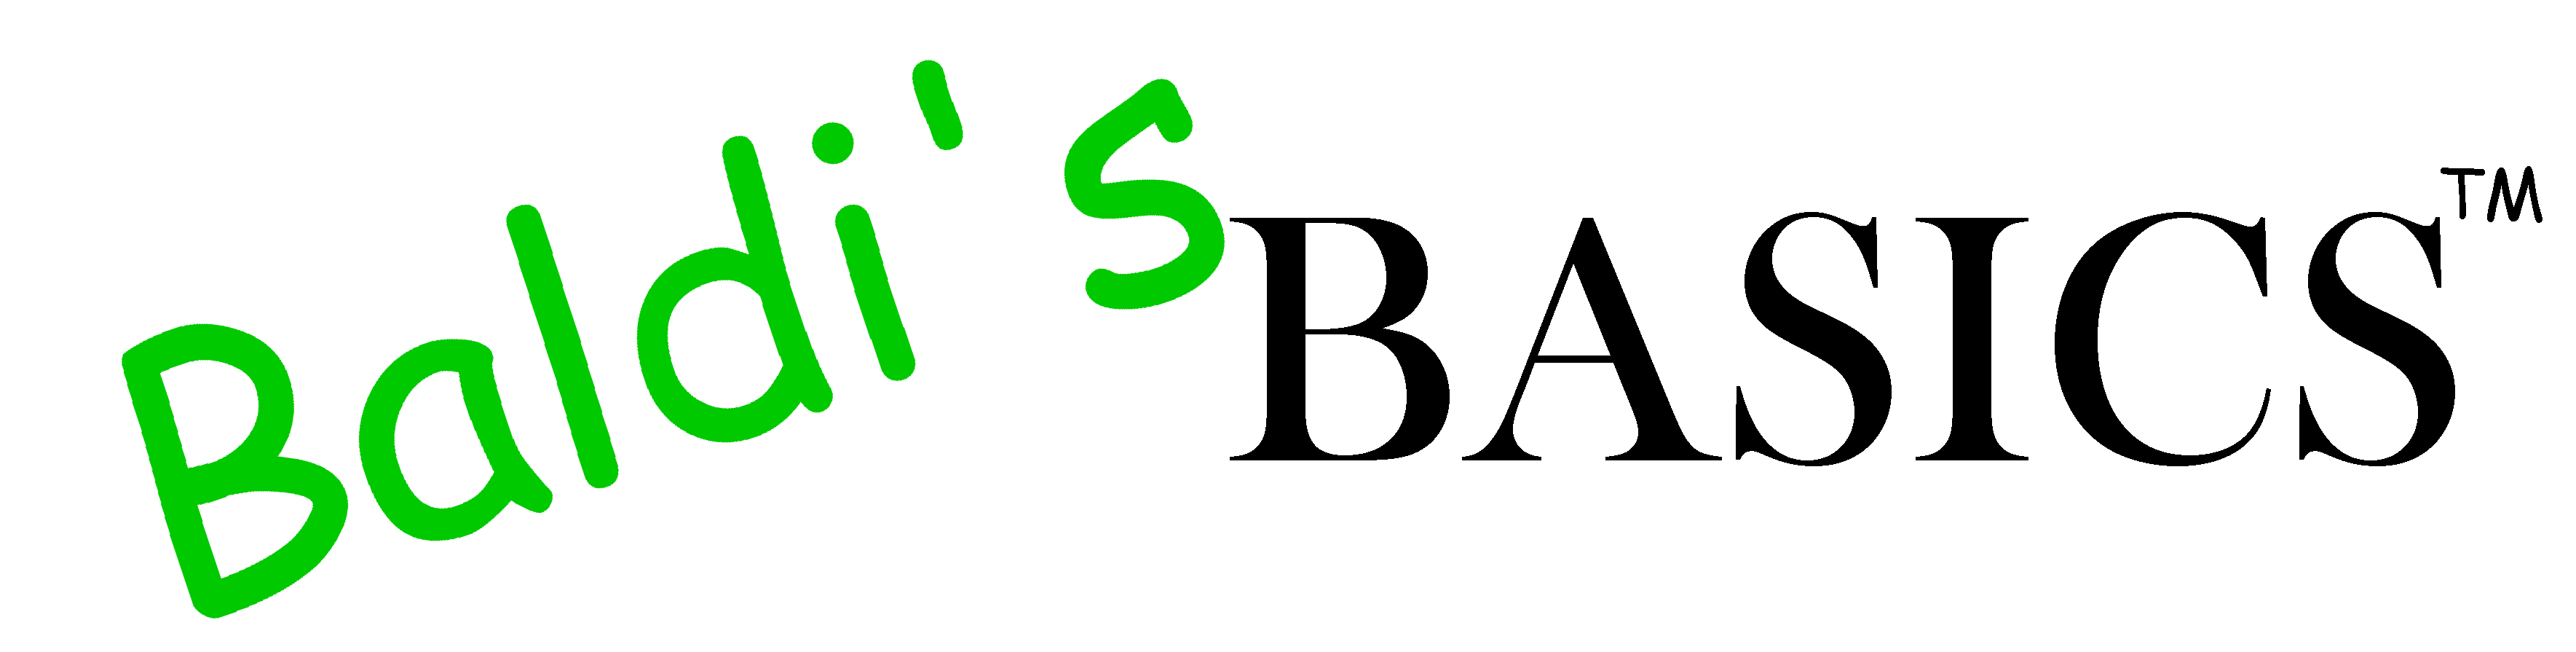 БАЛДИ бейсикс. БАЛДИ логотип. Baldi Basics logo. Baldi's Basics in Education and Learning логотип. Kickstarter baldi